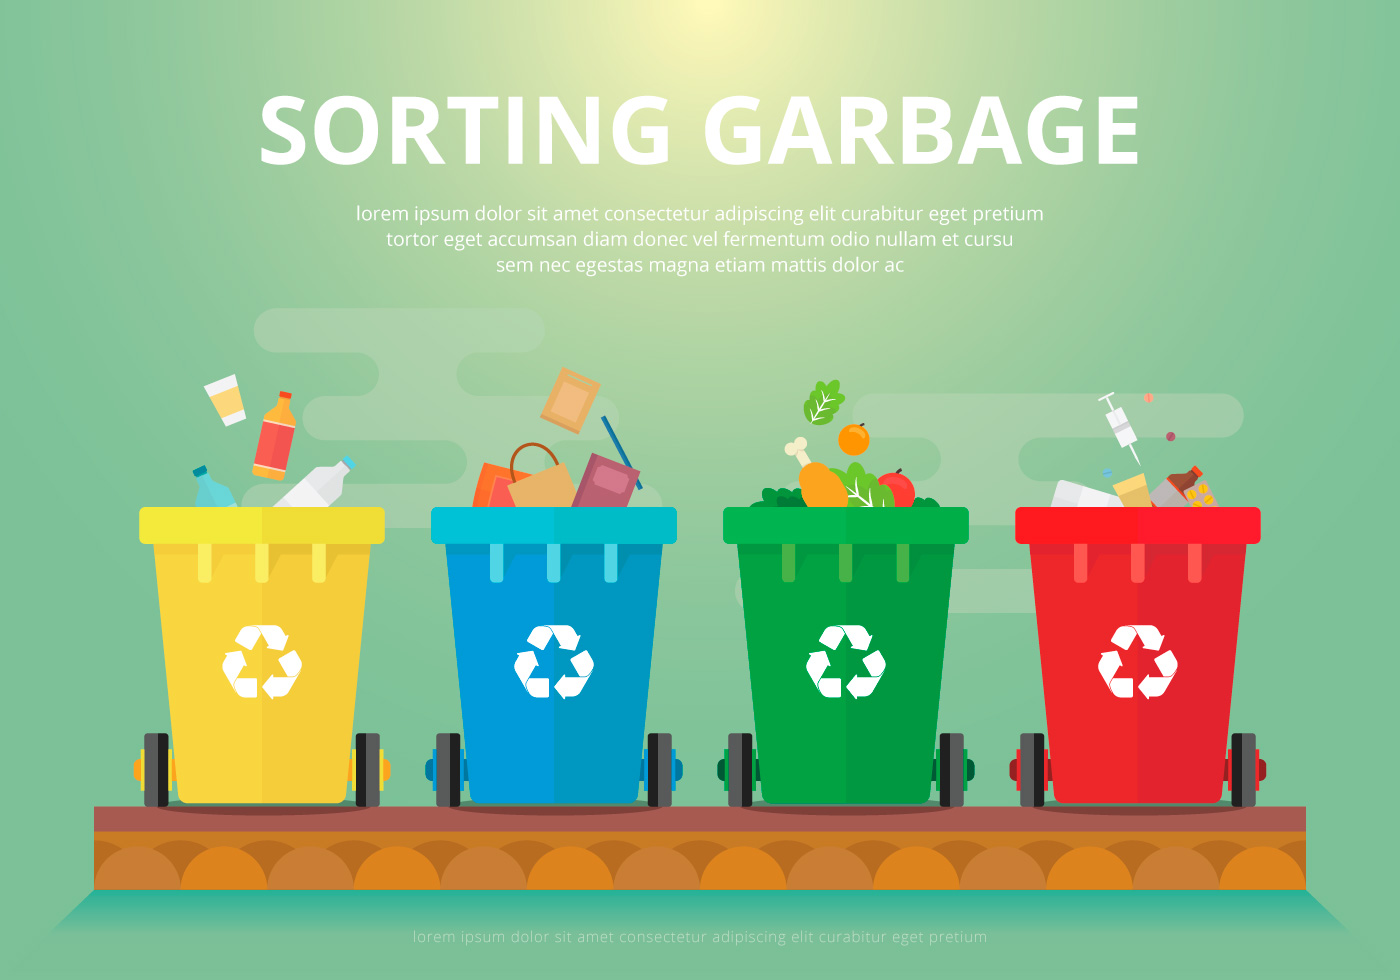 Download Sorting Garbage, Biodegradable Flat Illustration for free.